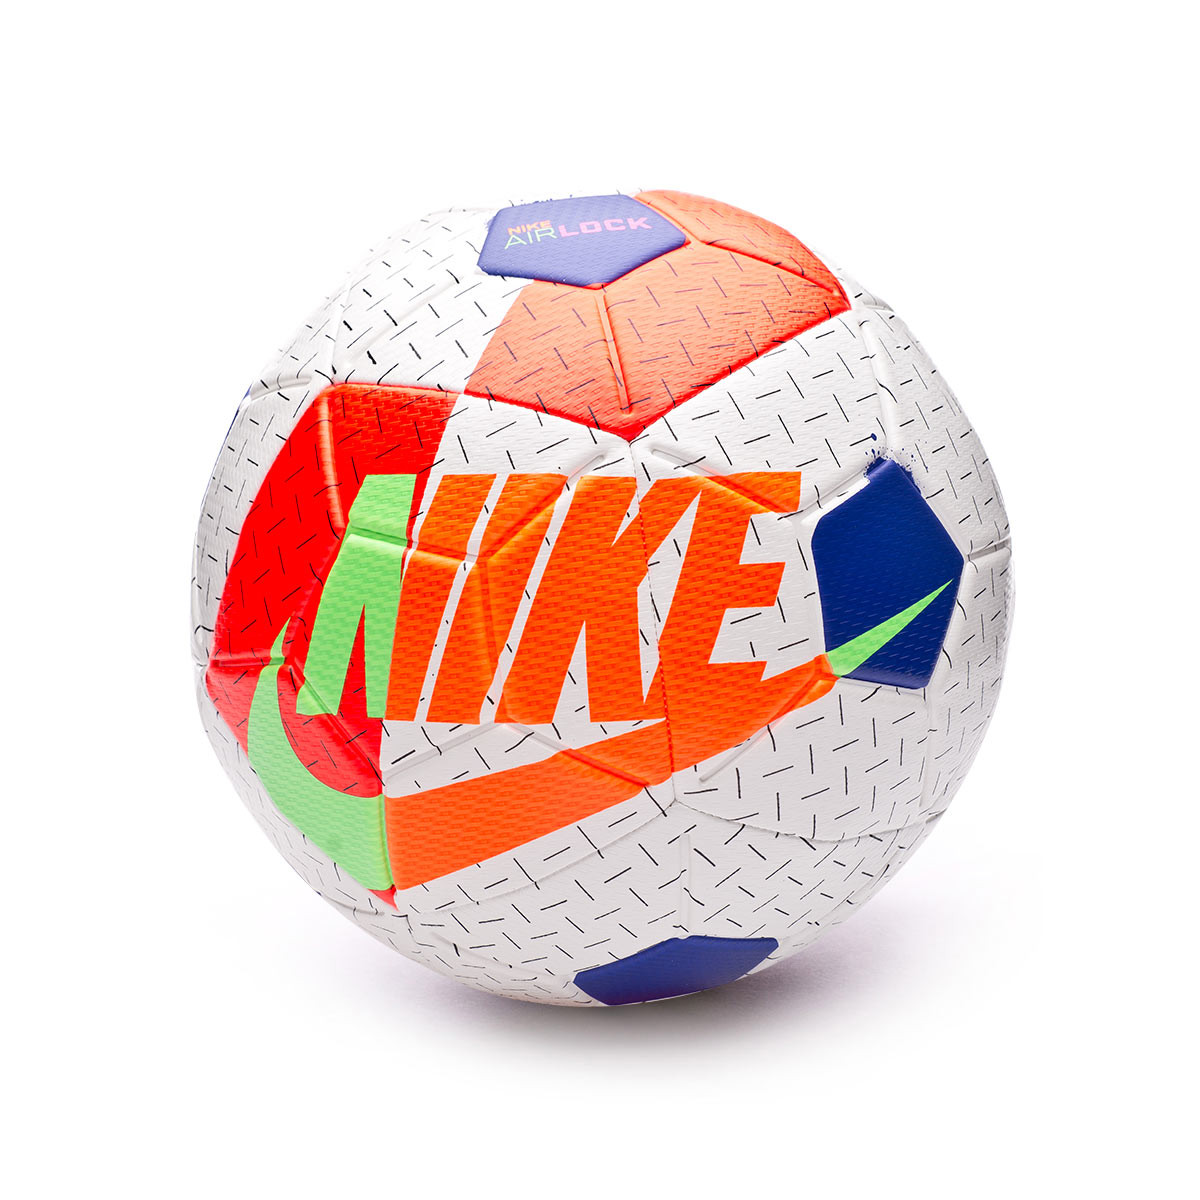 nike airlock street x soccer ball